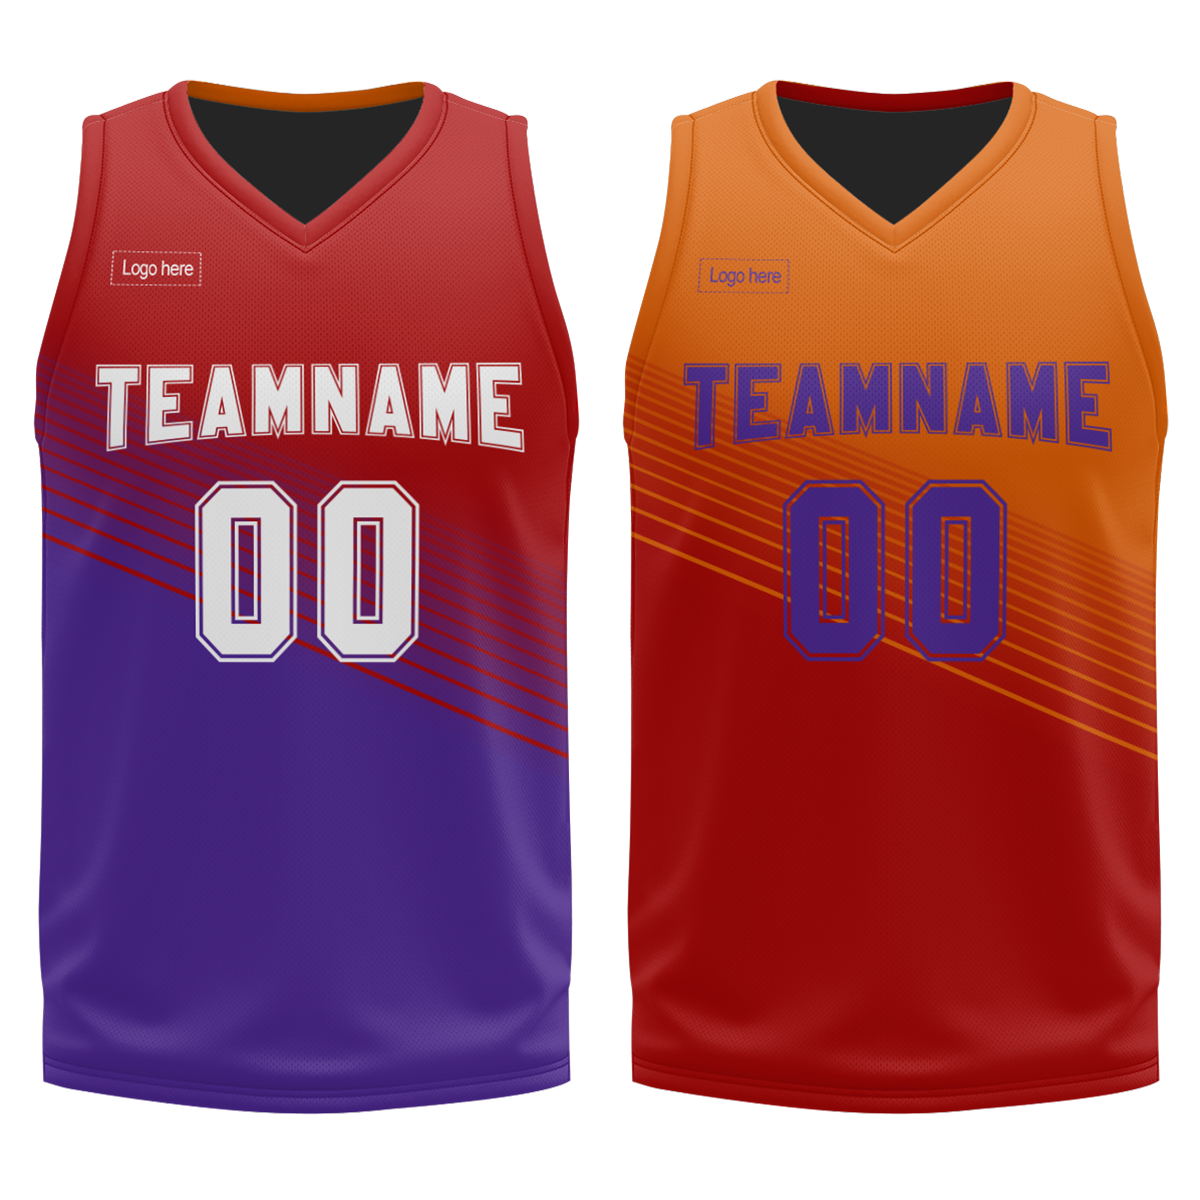 custom-sports-uniform-jerseys-printed-sublimation-reversible-athletic-team-basketball-vest-jersey-wear-for-men-women-at-cj-pod-4